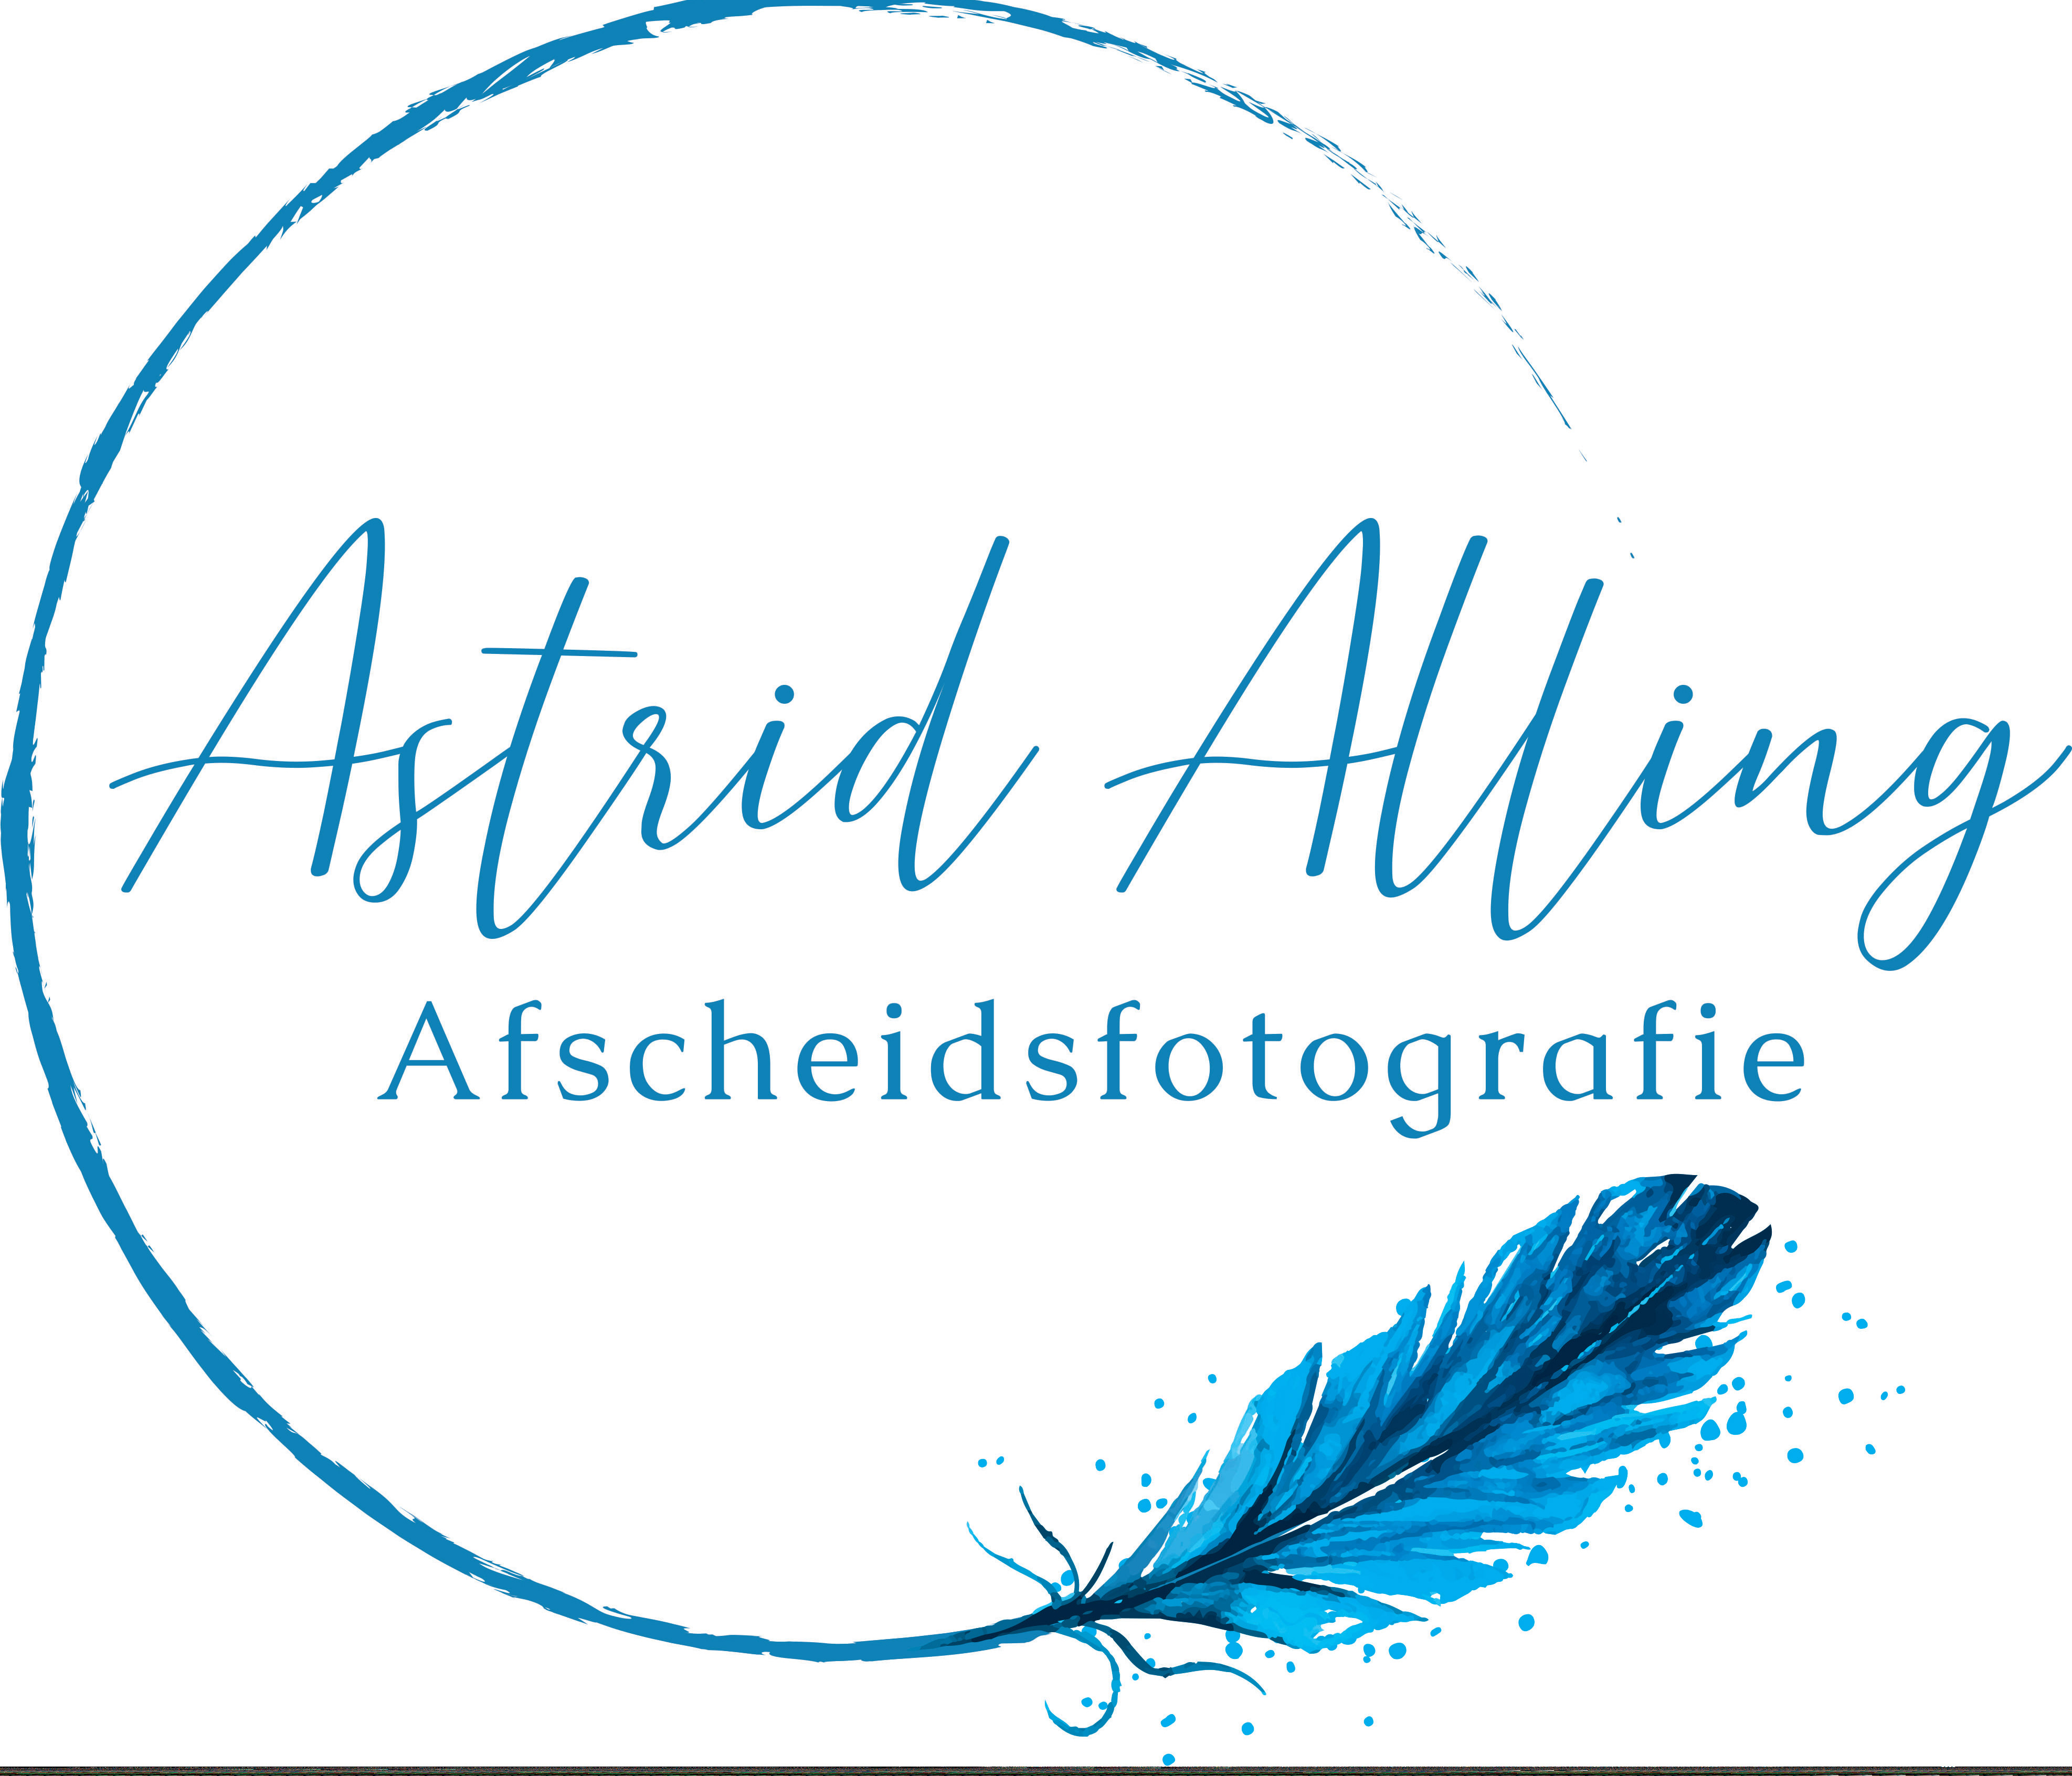 Astrid Alling